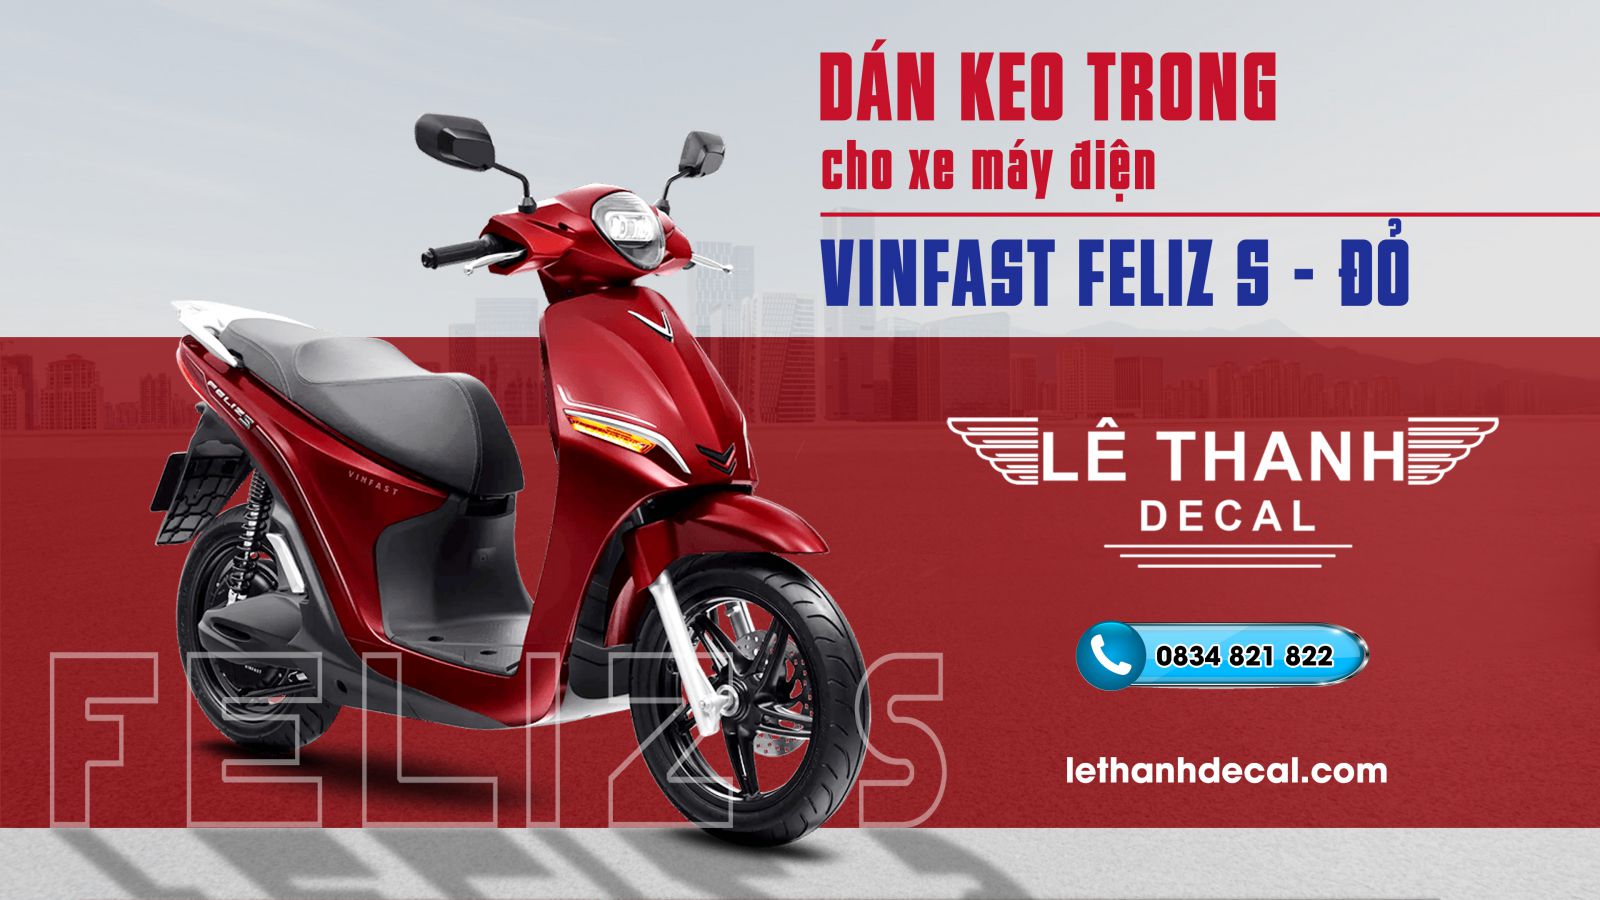 dán keo trong xe máy điện VinFast Feliz S 2022 đỏ 